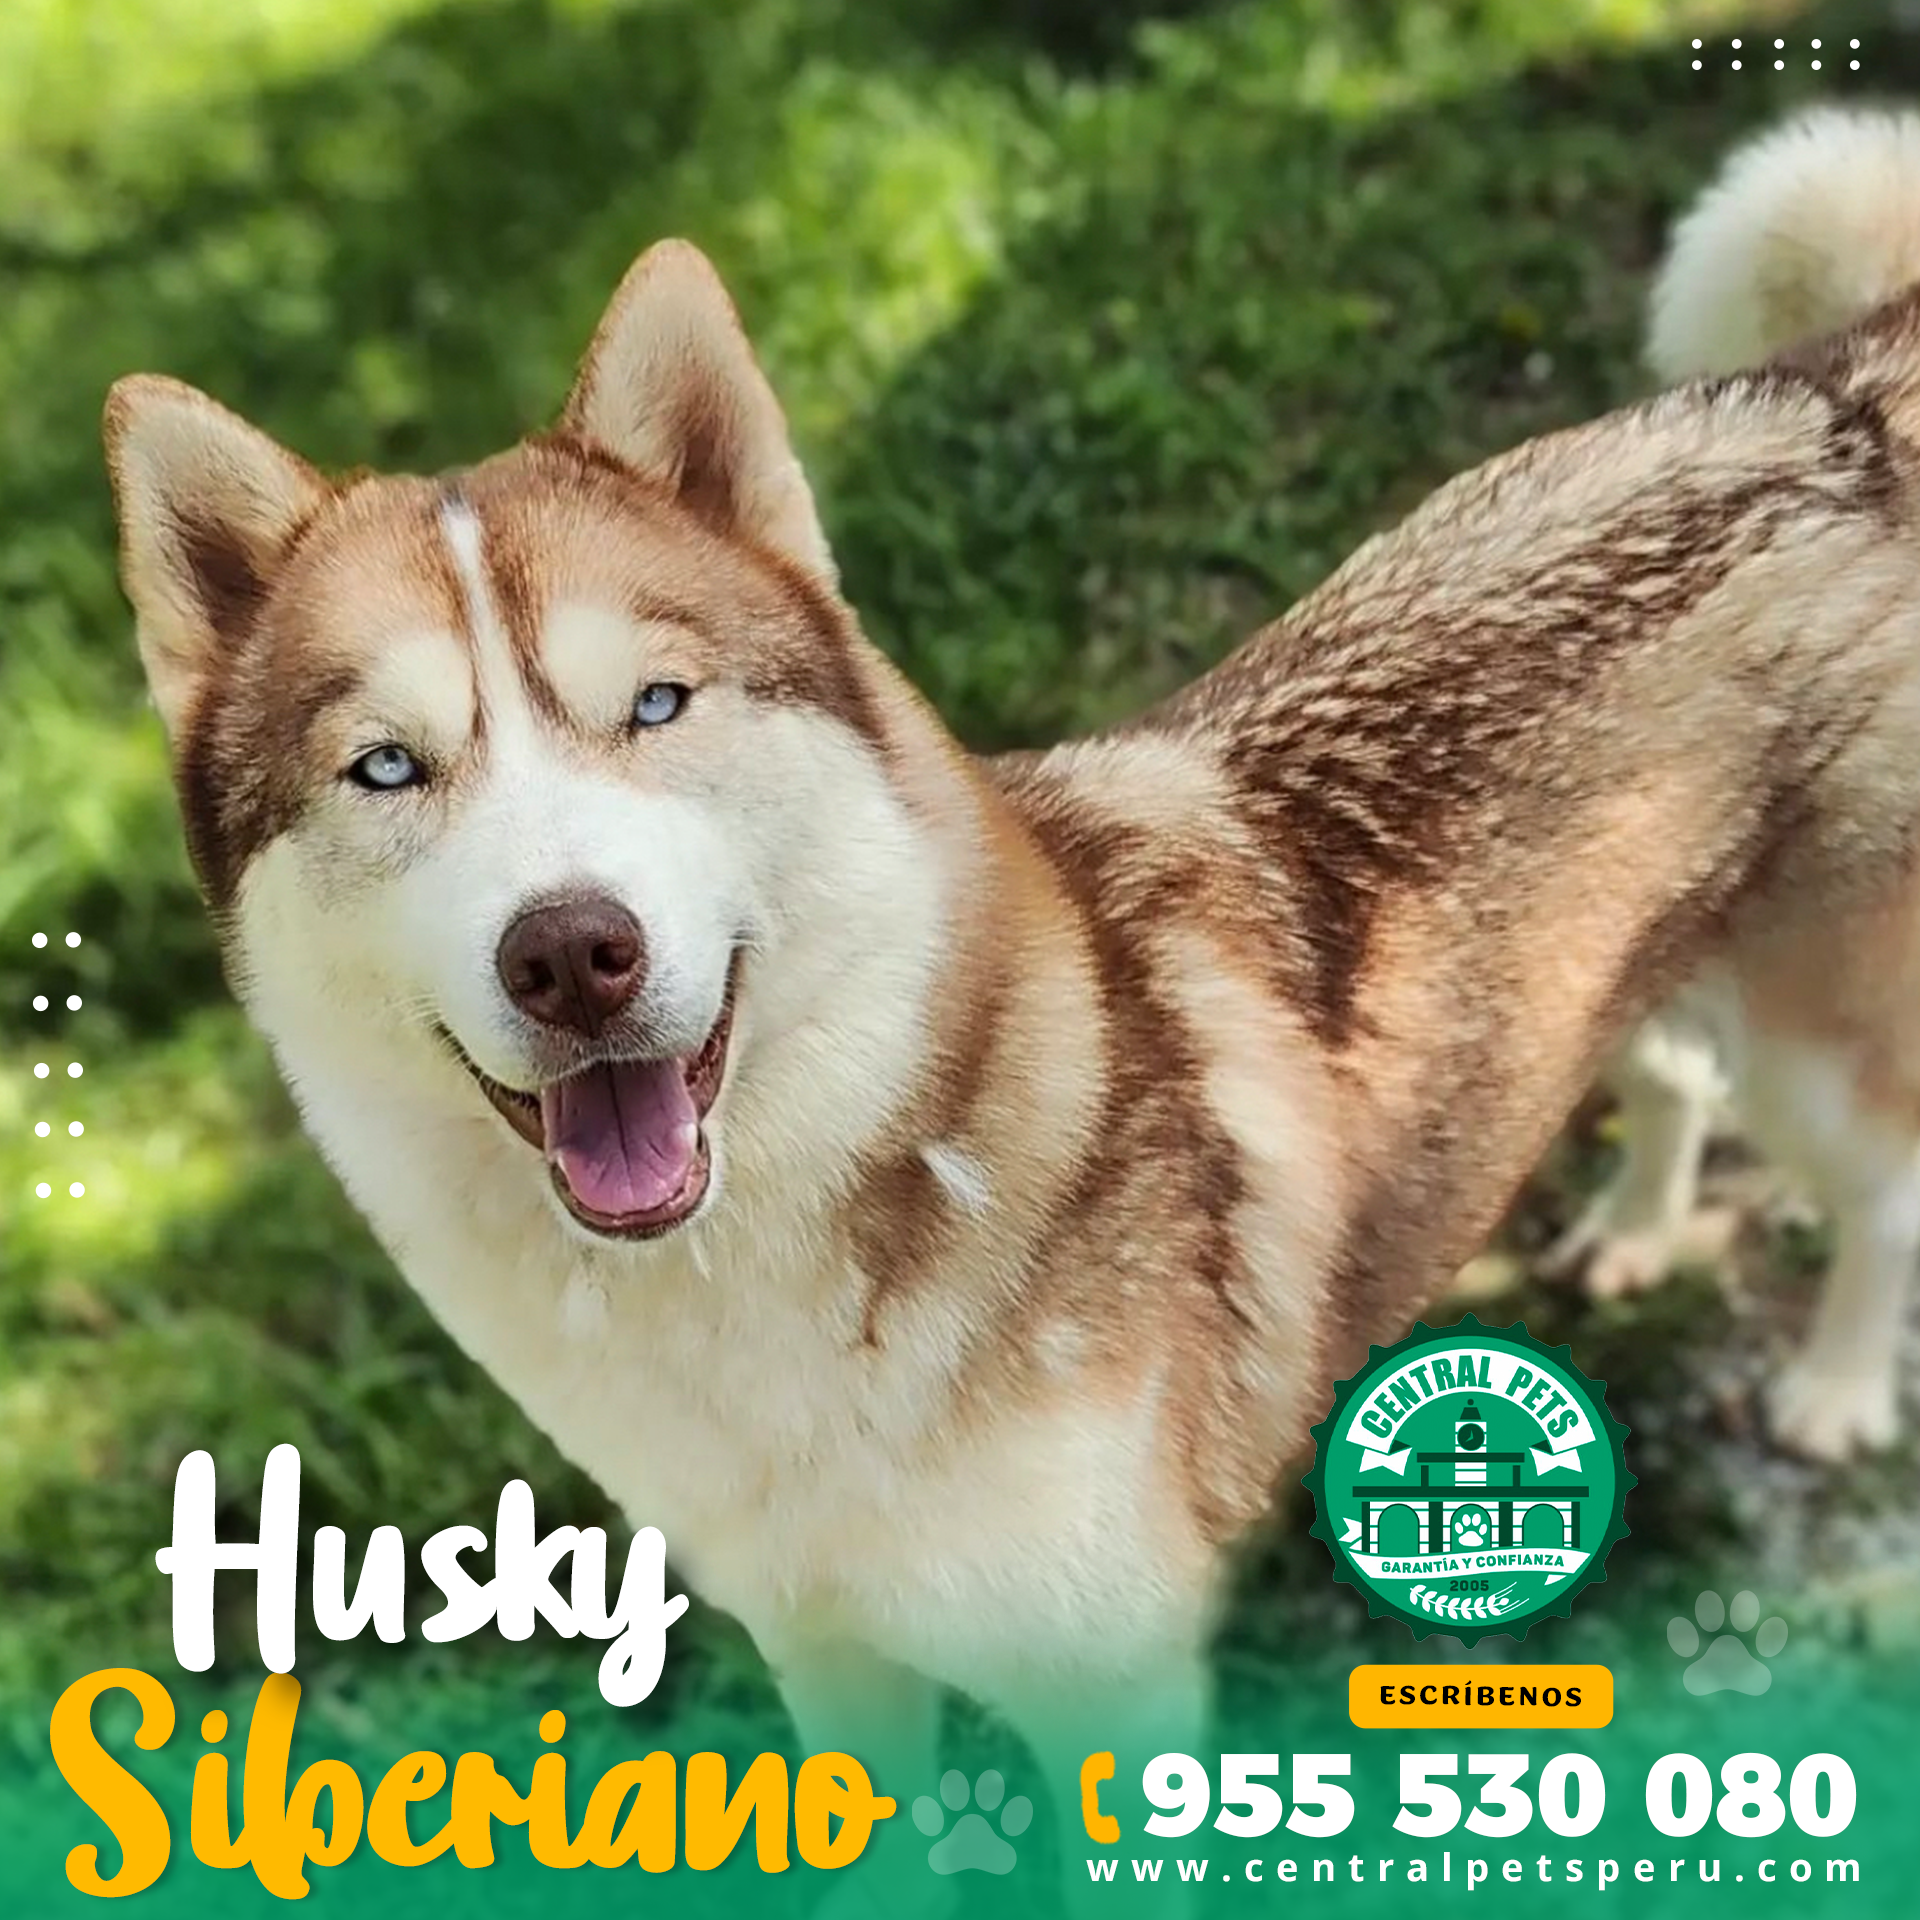 HUSKY SIBERIANO - Central Pets Perú